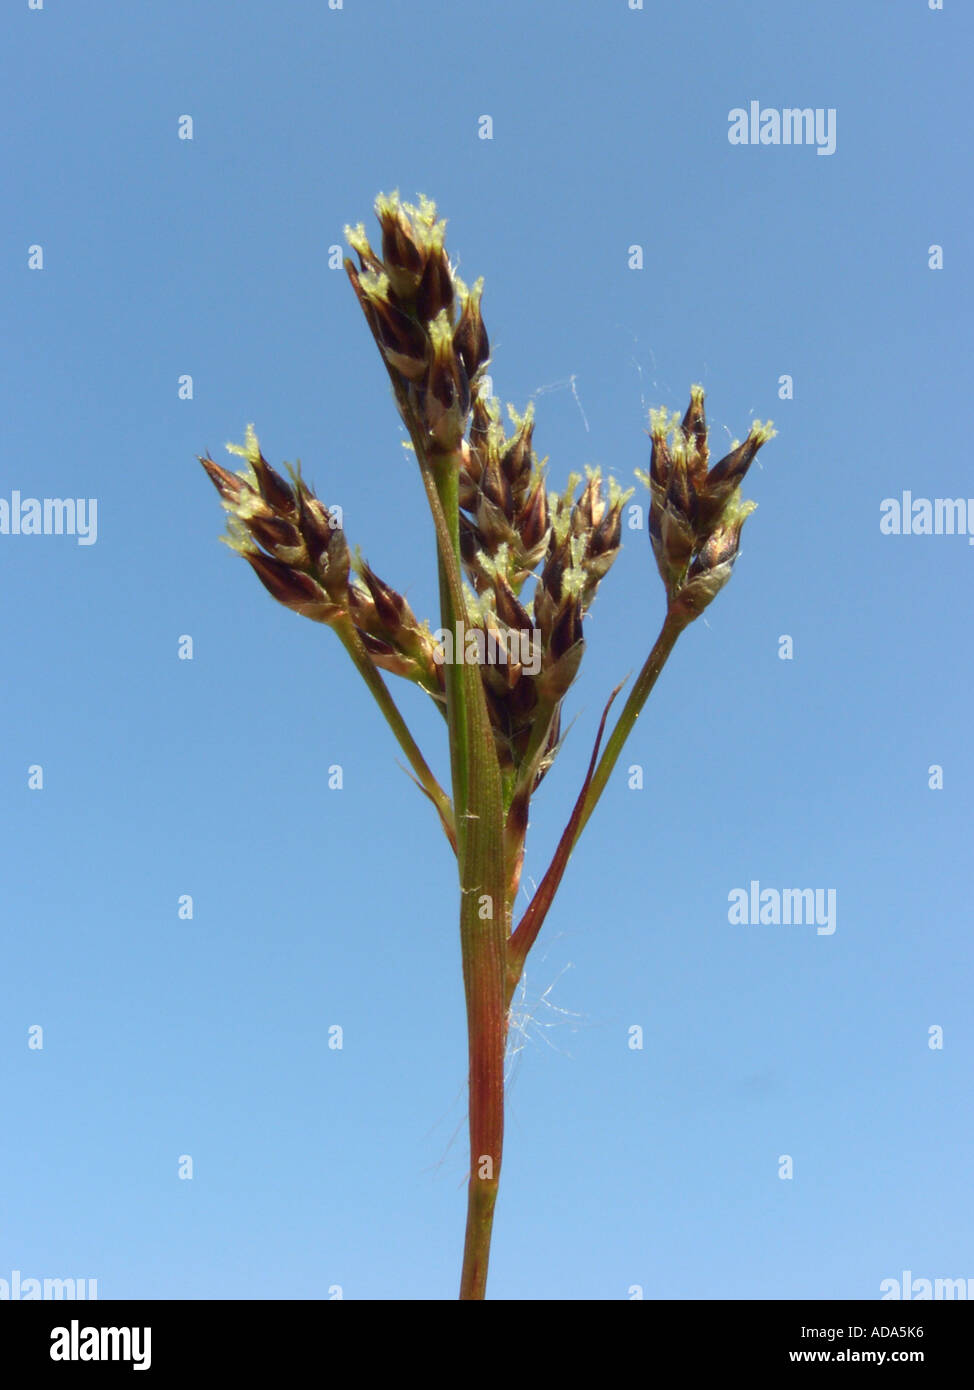 common wood-rush, heath wood-rush, many headed wood-rush (Luzula multiflora ssp. multiflora), inflorescence against blue sky Stock Photo